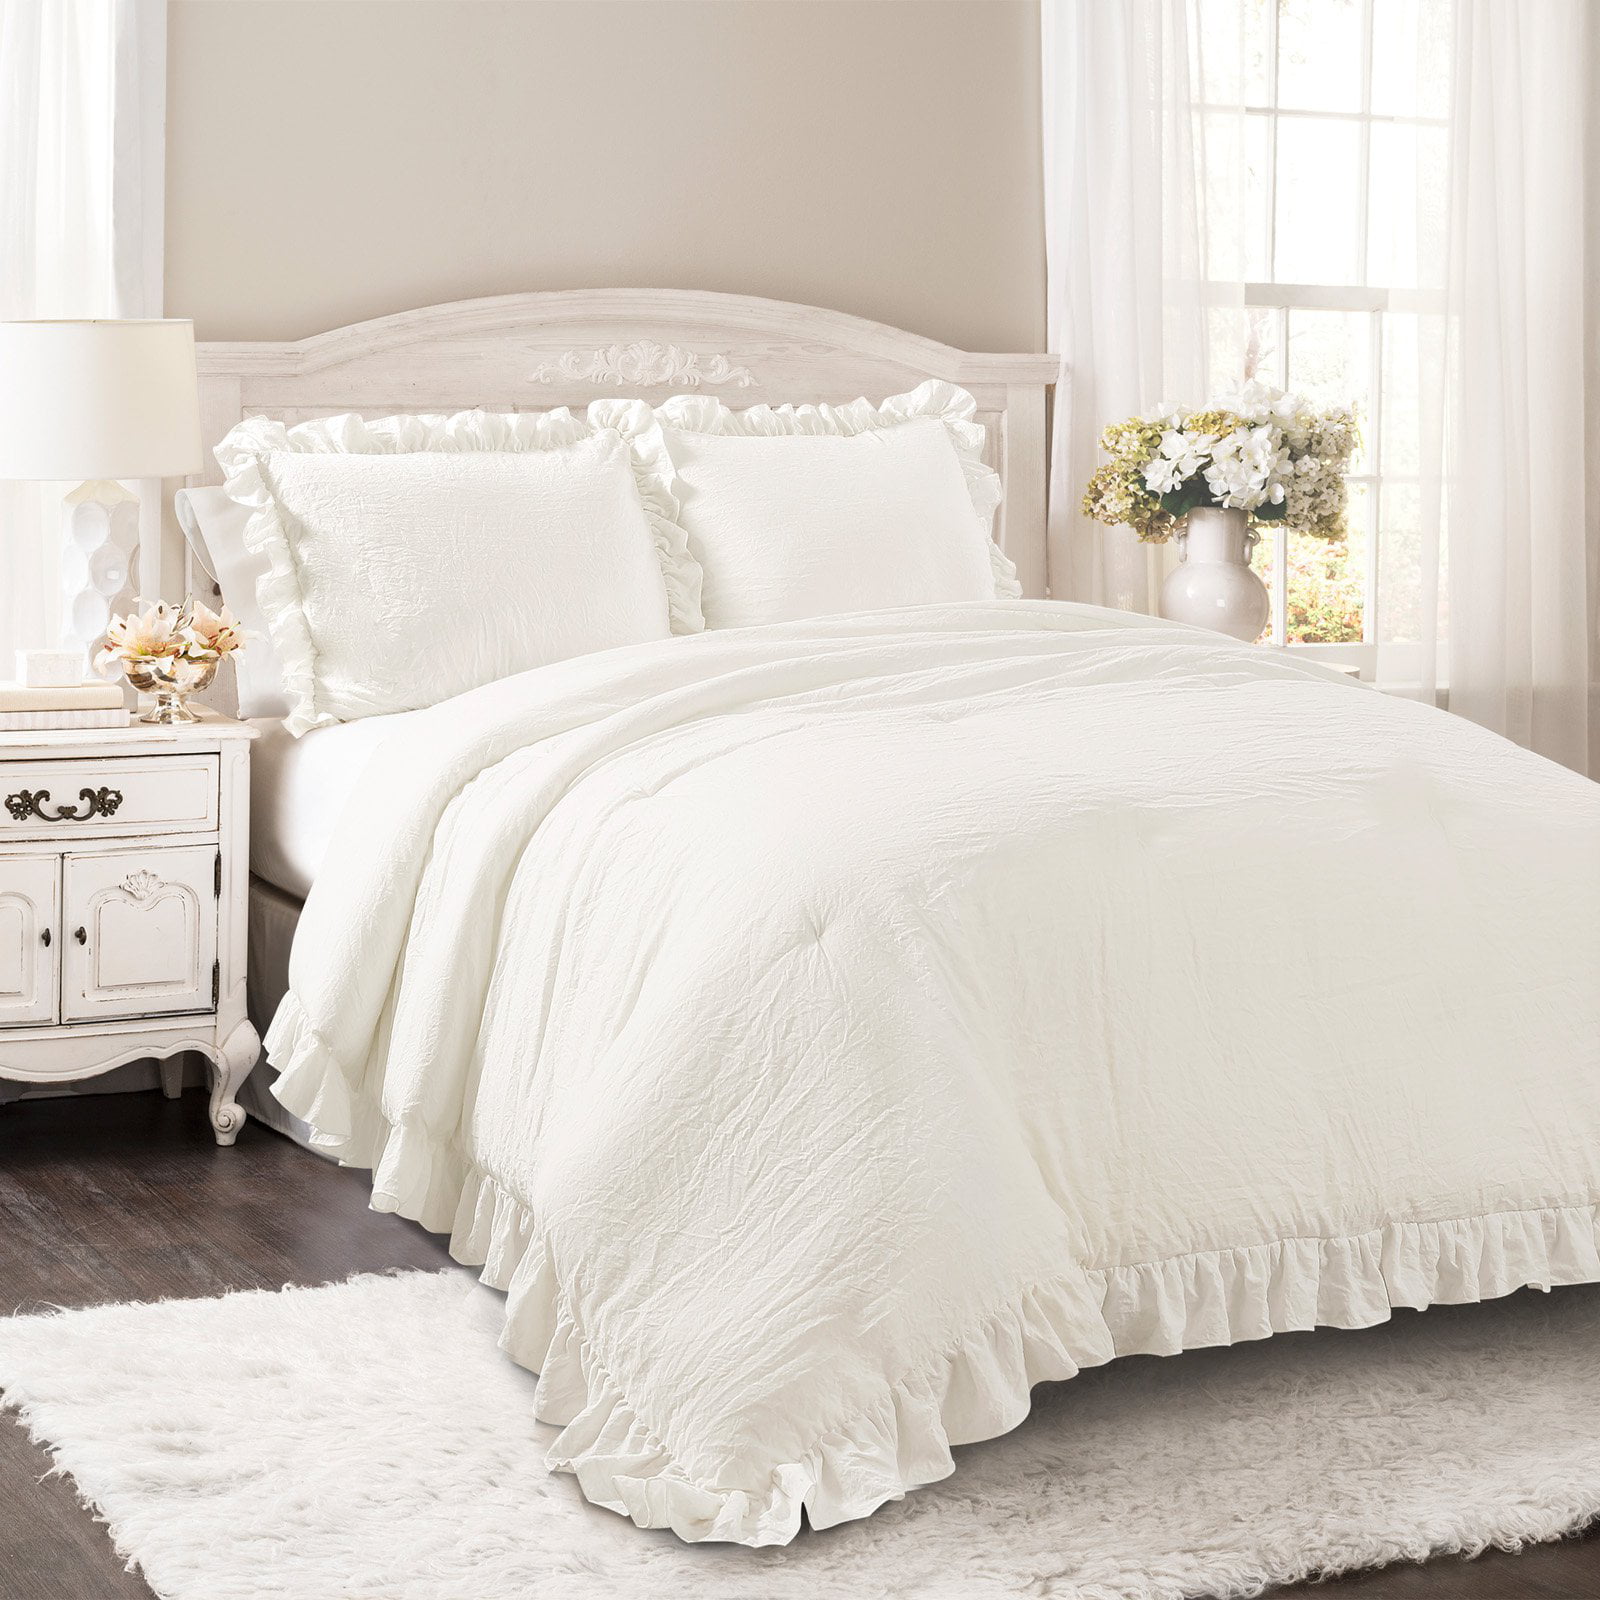 Reyna Comforter White 3Pc Set Full Queen Walmart com